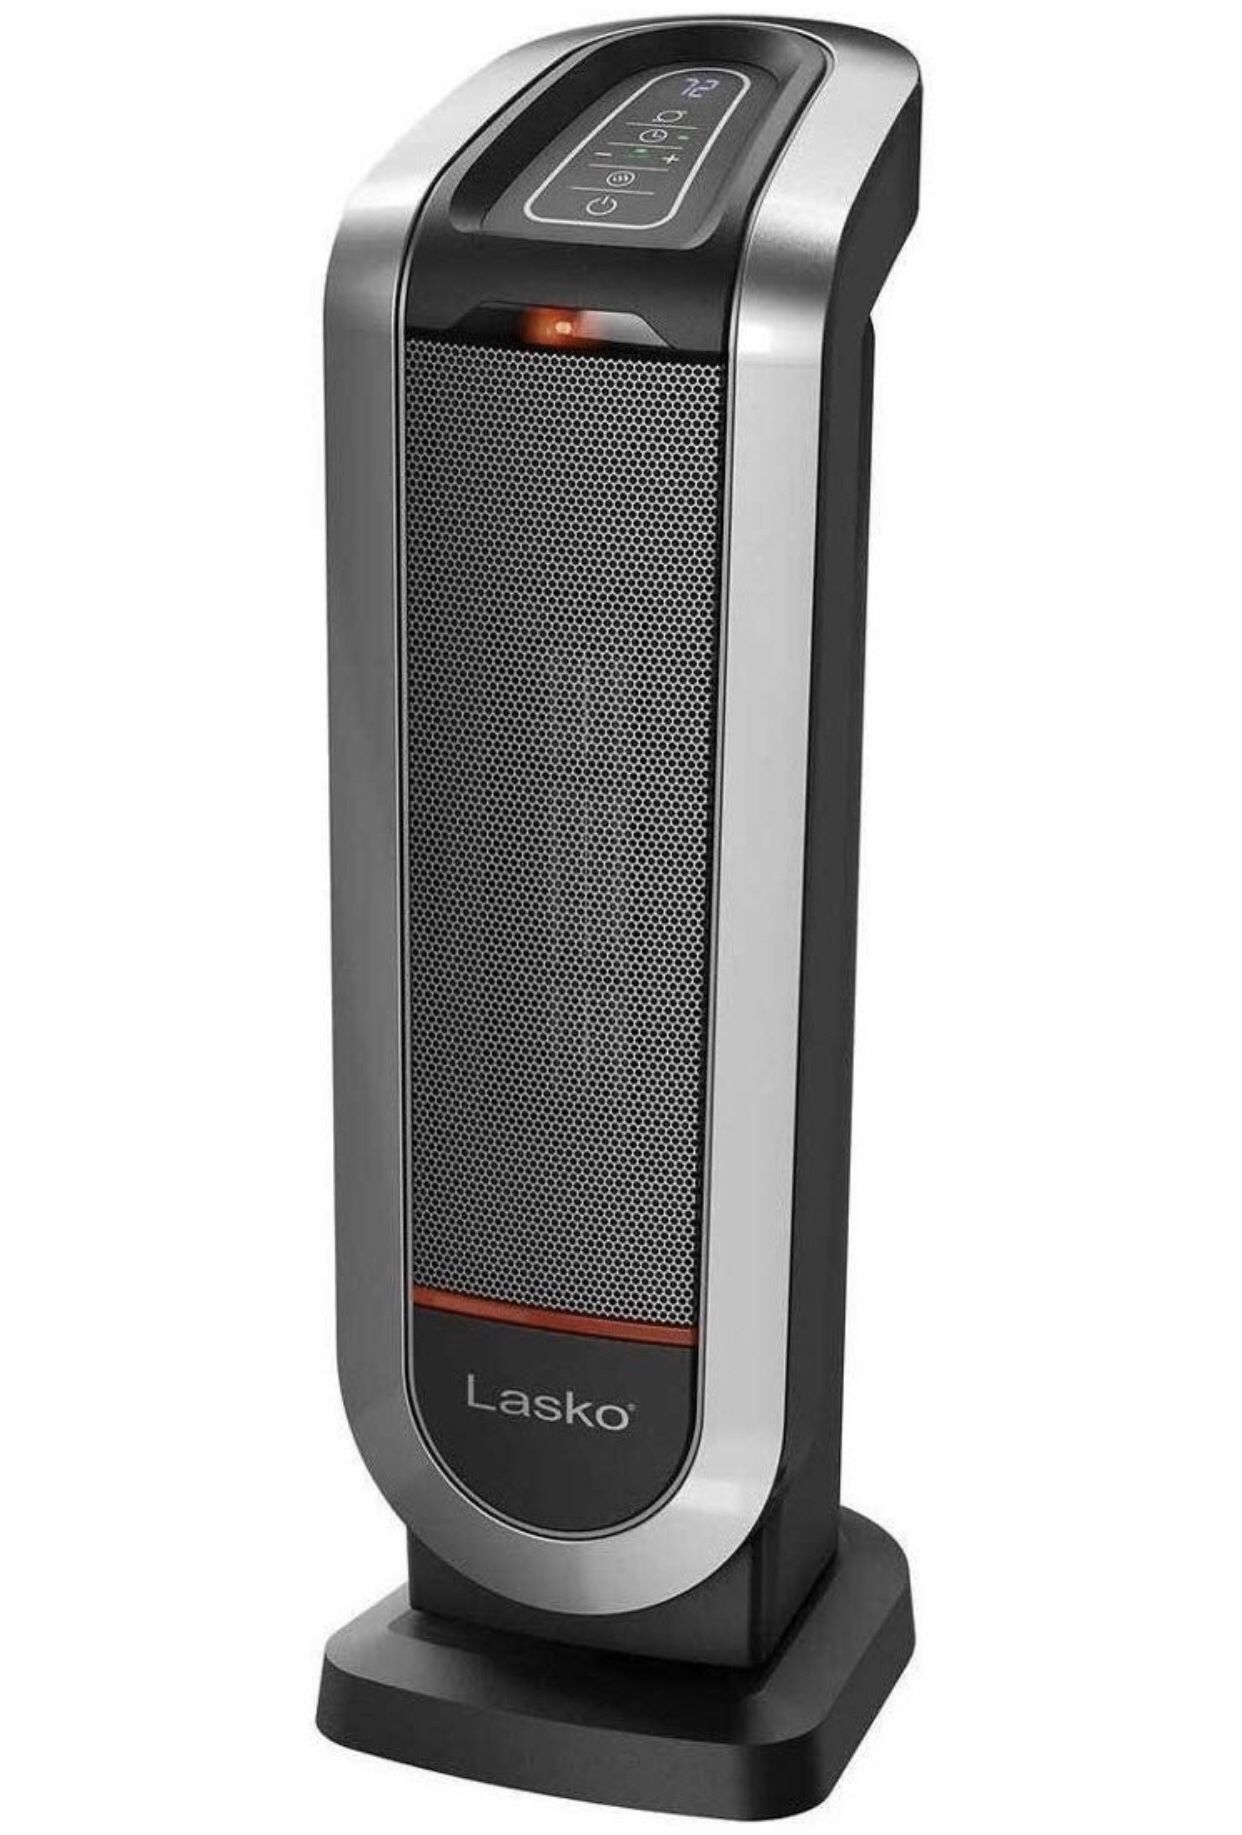 Lasko Ceramic Tower Heater With Remote Control CT22425 BRAND NEW!!!